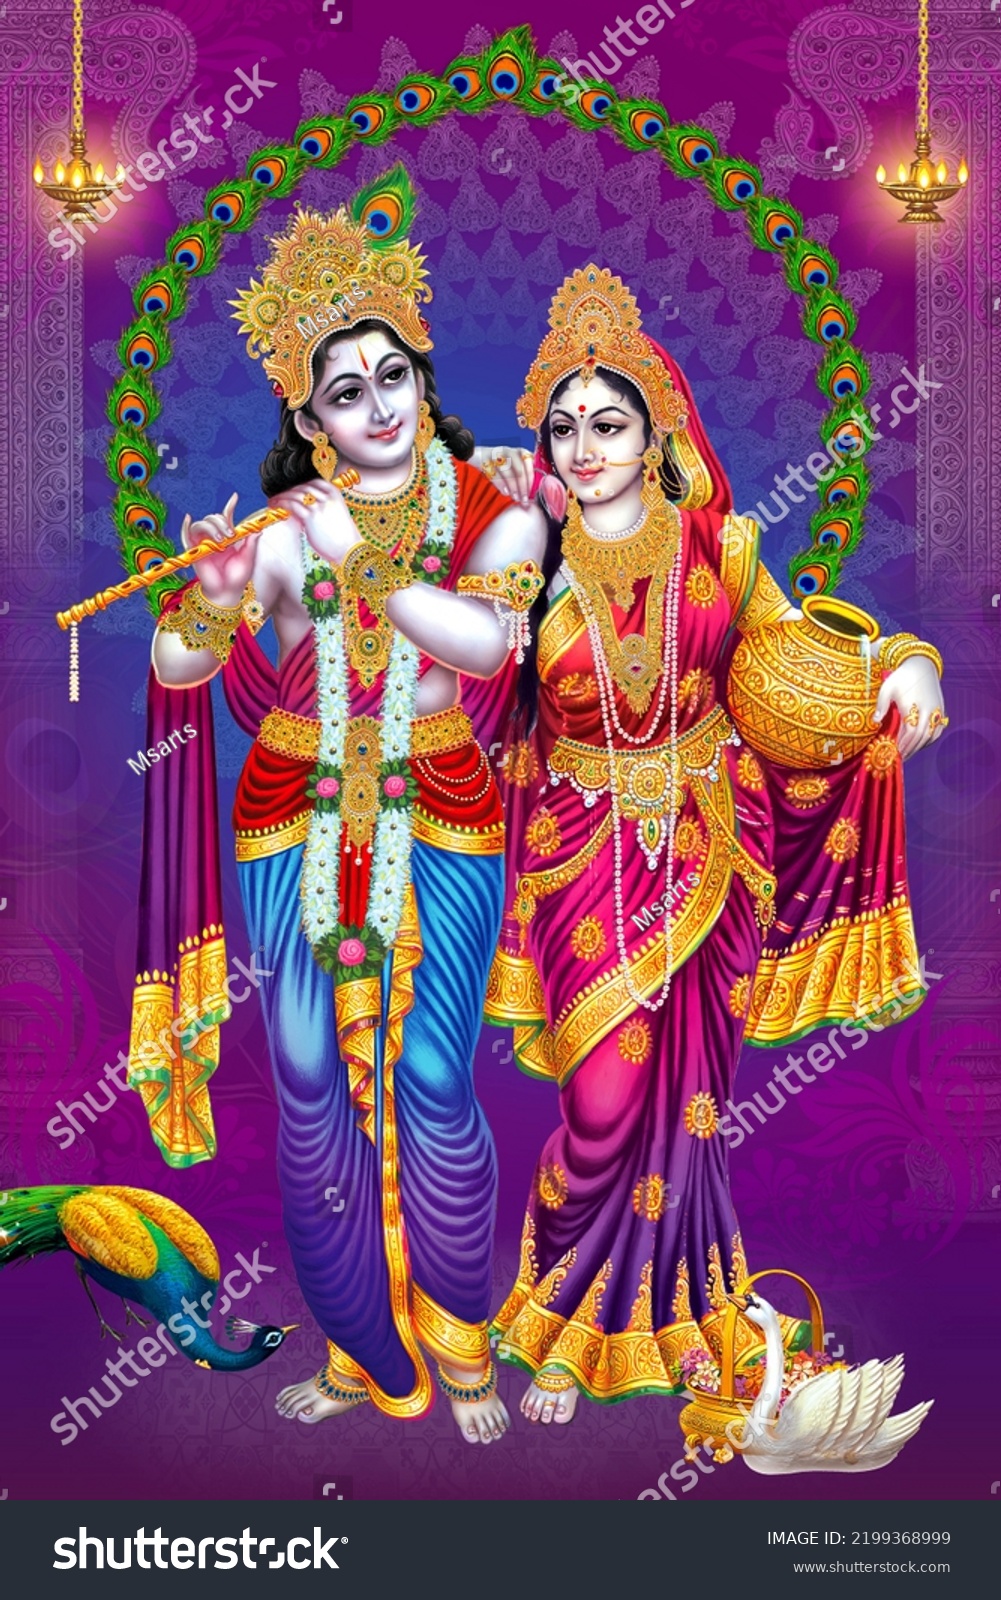 Lord Krishna Wall Poster Lord Radha Stock Illustration 2199368999 Shutterstock 